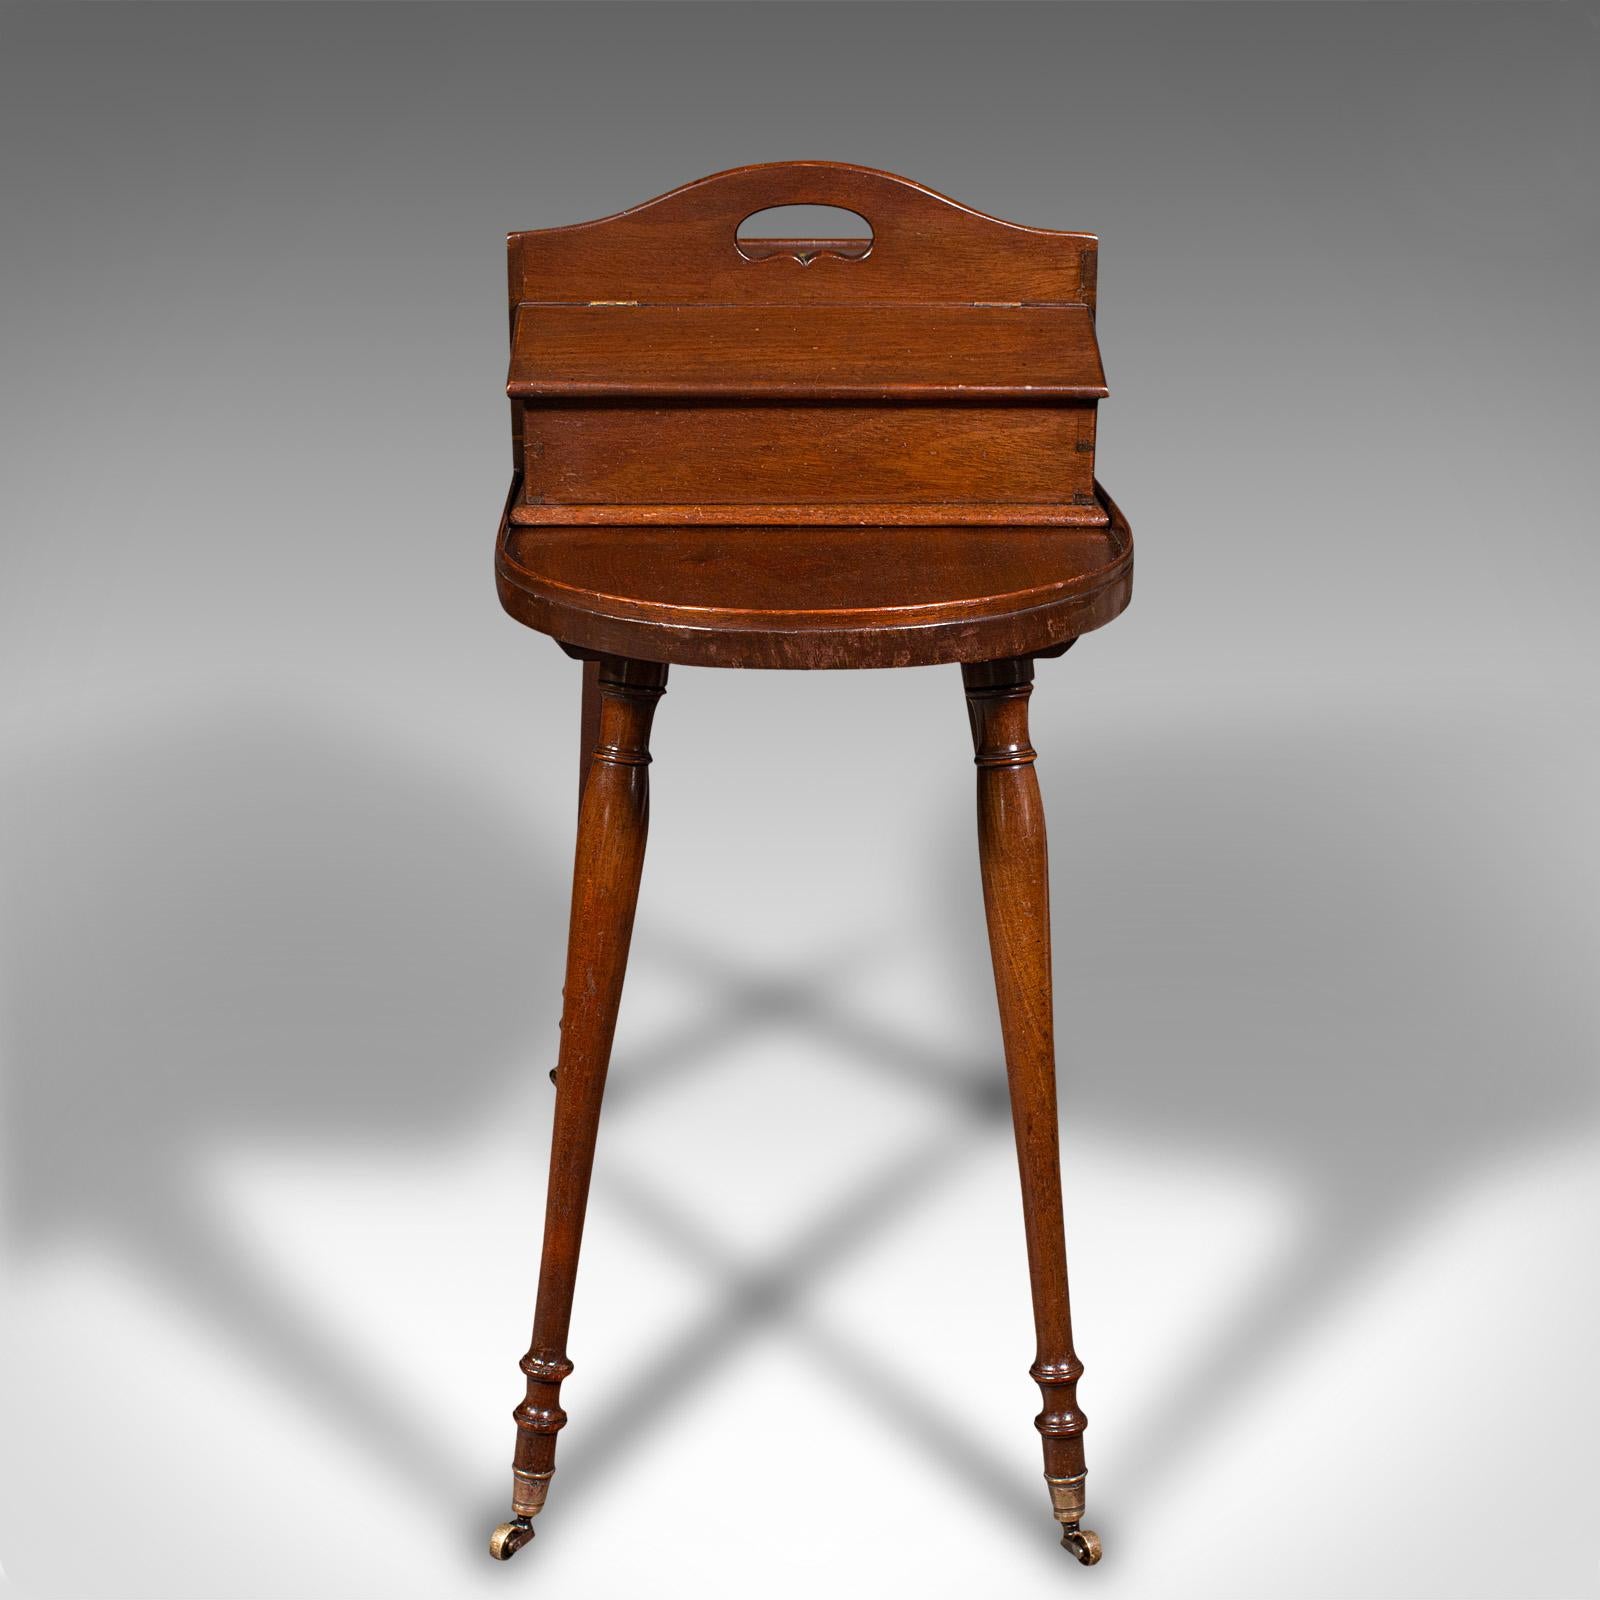 British Antique Butler's Silver Valet Stand, English, Walnut, Work Box, Victorian, 1880 For Sale